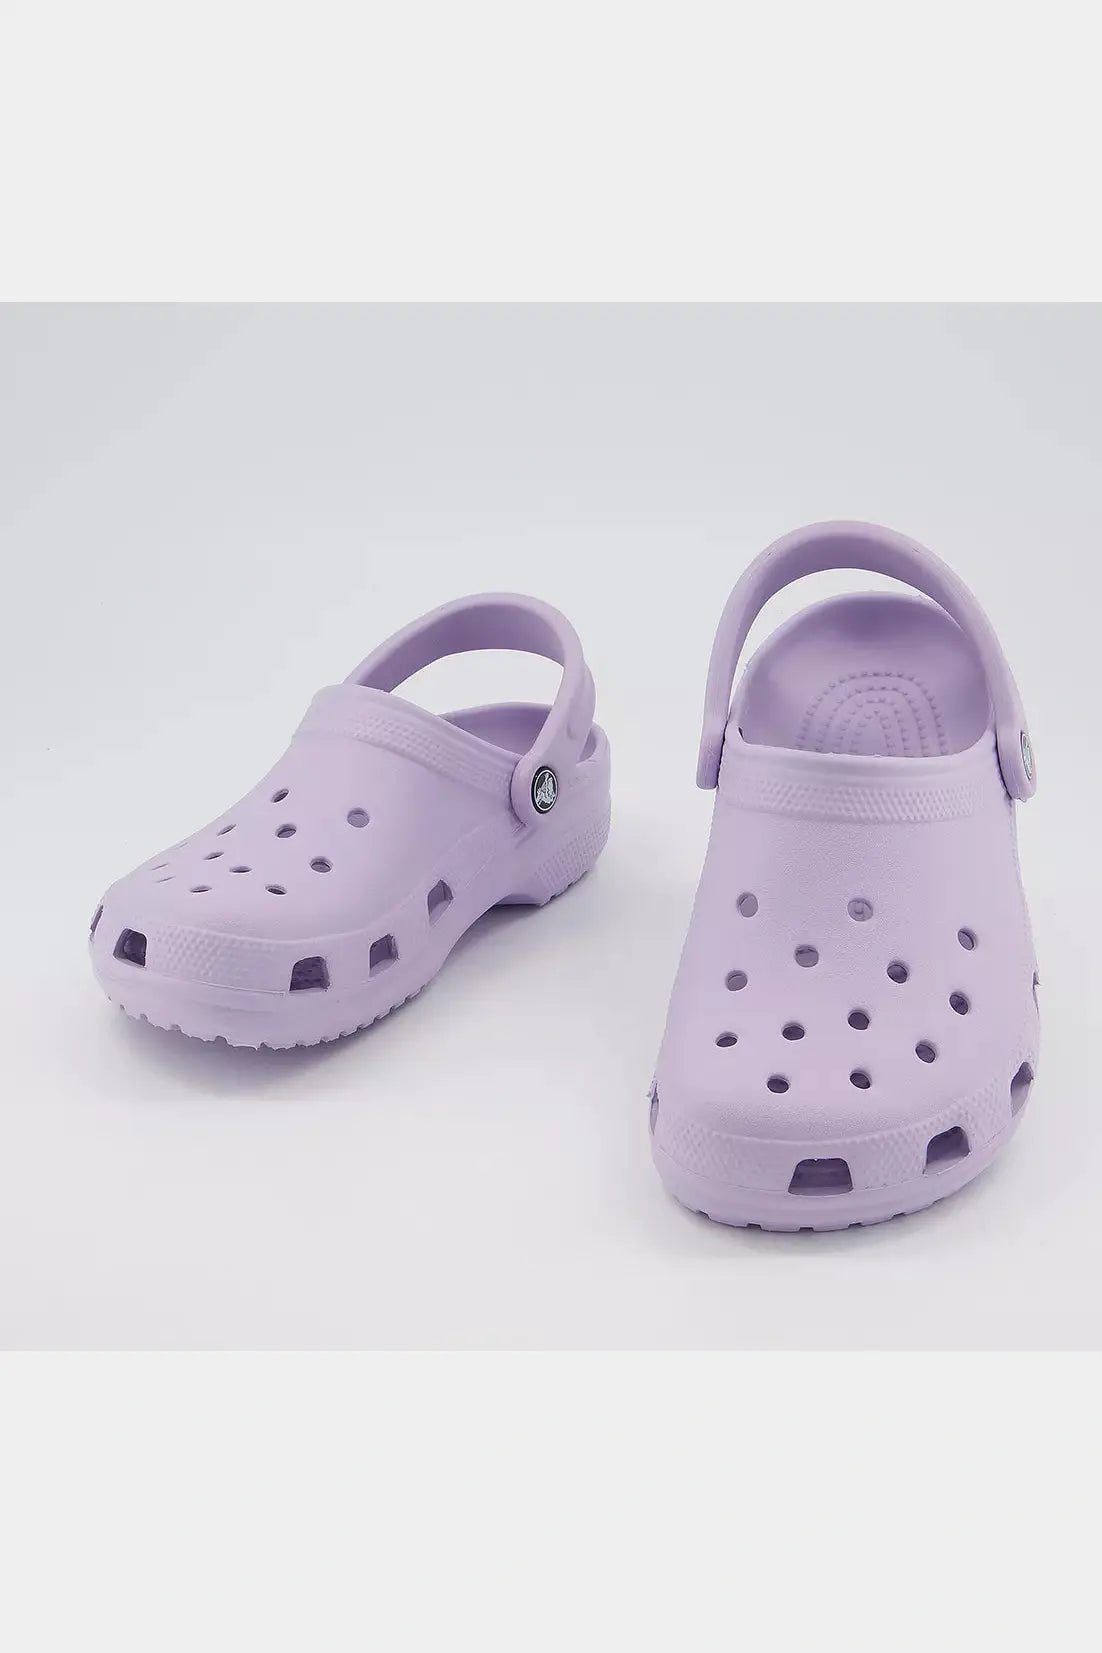 CROCS - toddler classic clog - lavender